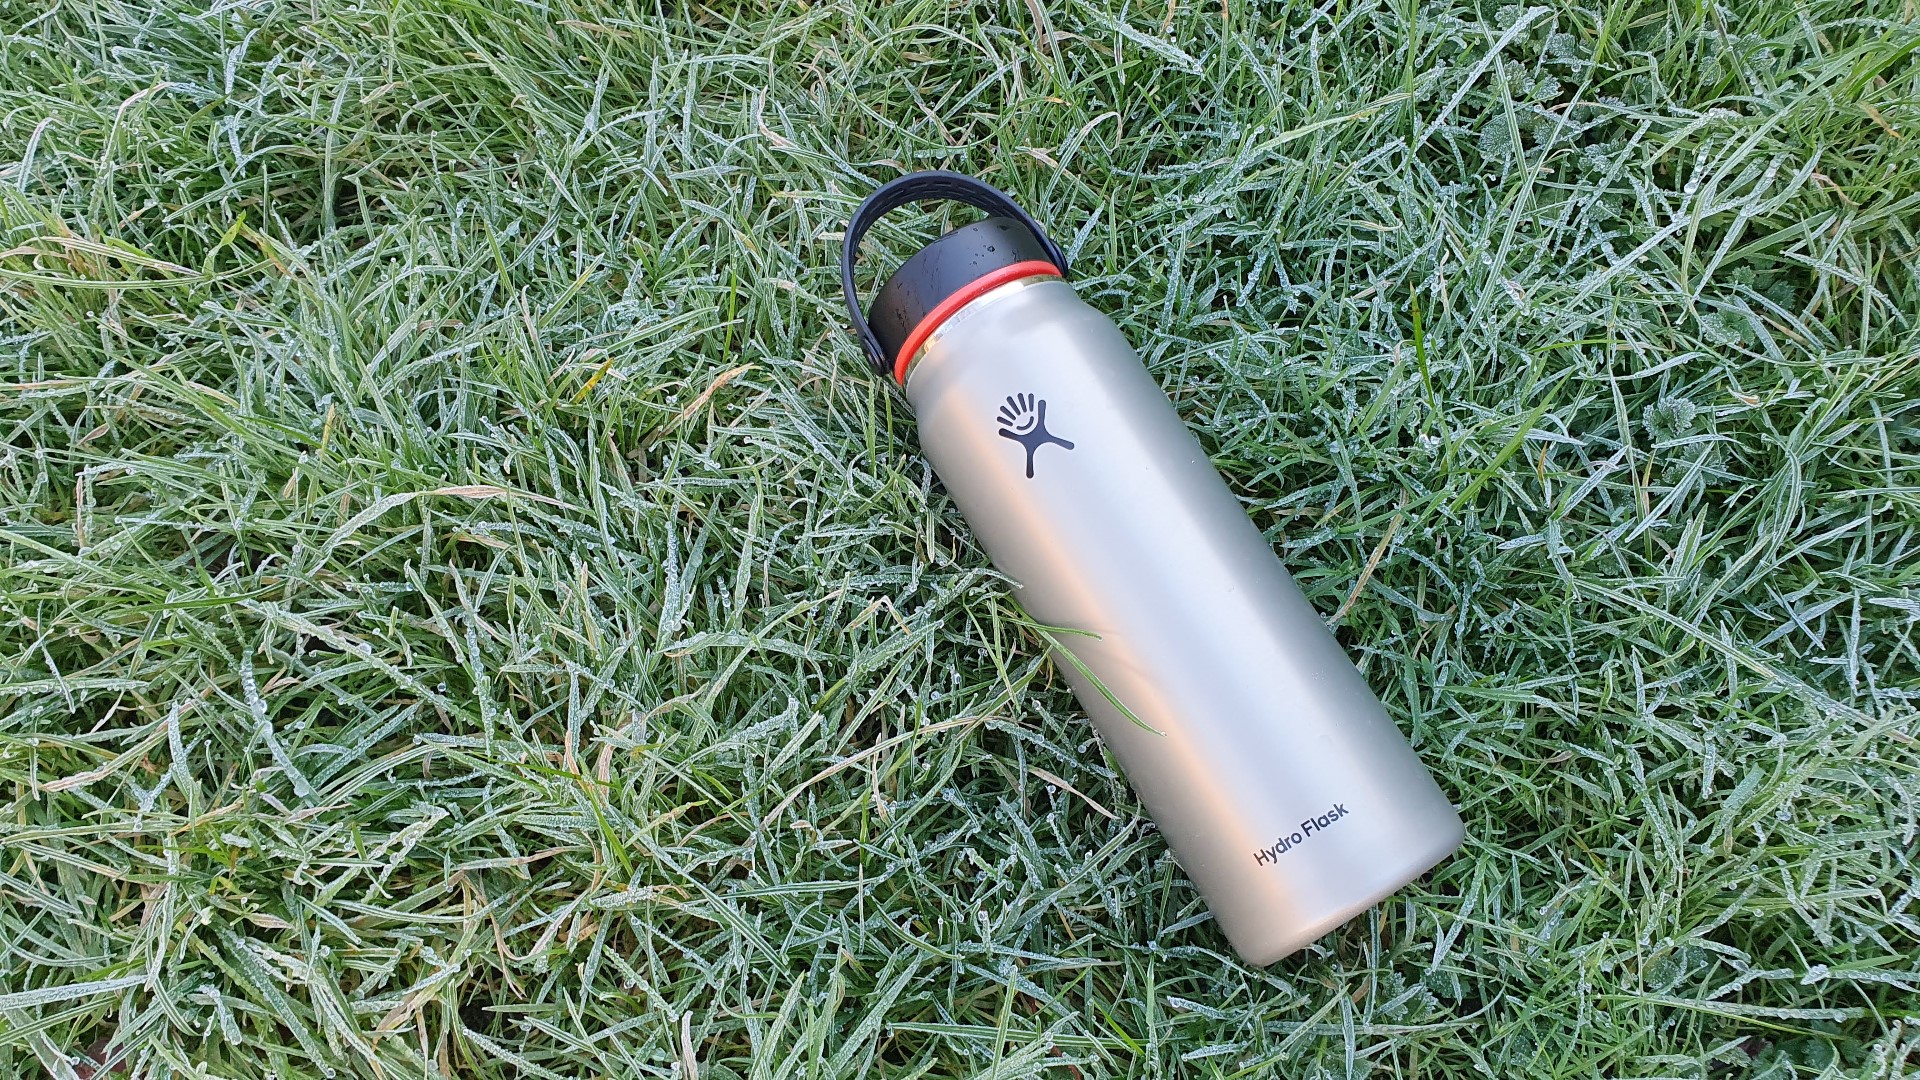 Hydro Flask Lightweight Wide Mouth 32 oz Trail Water Bottle